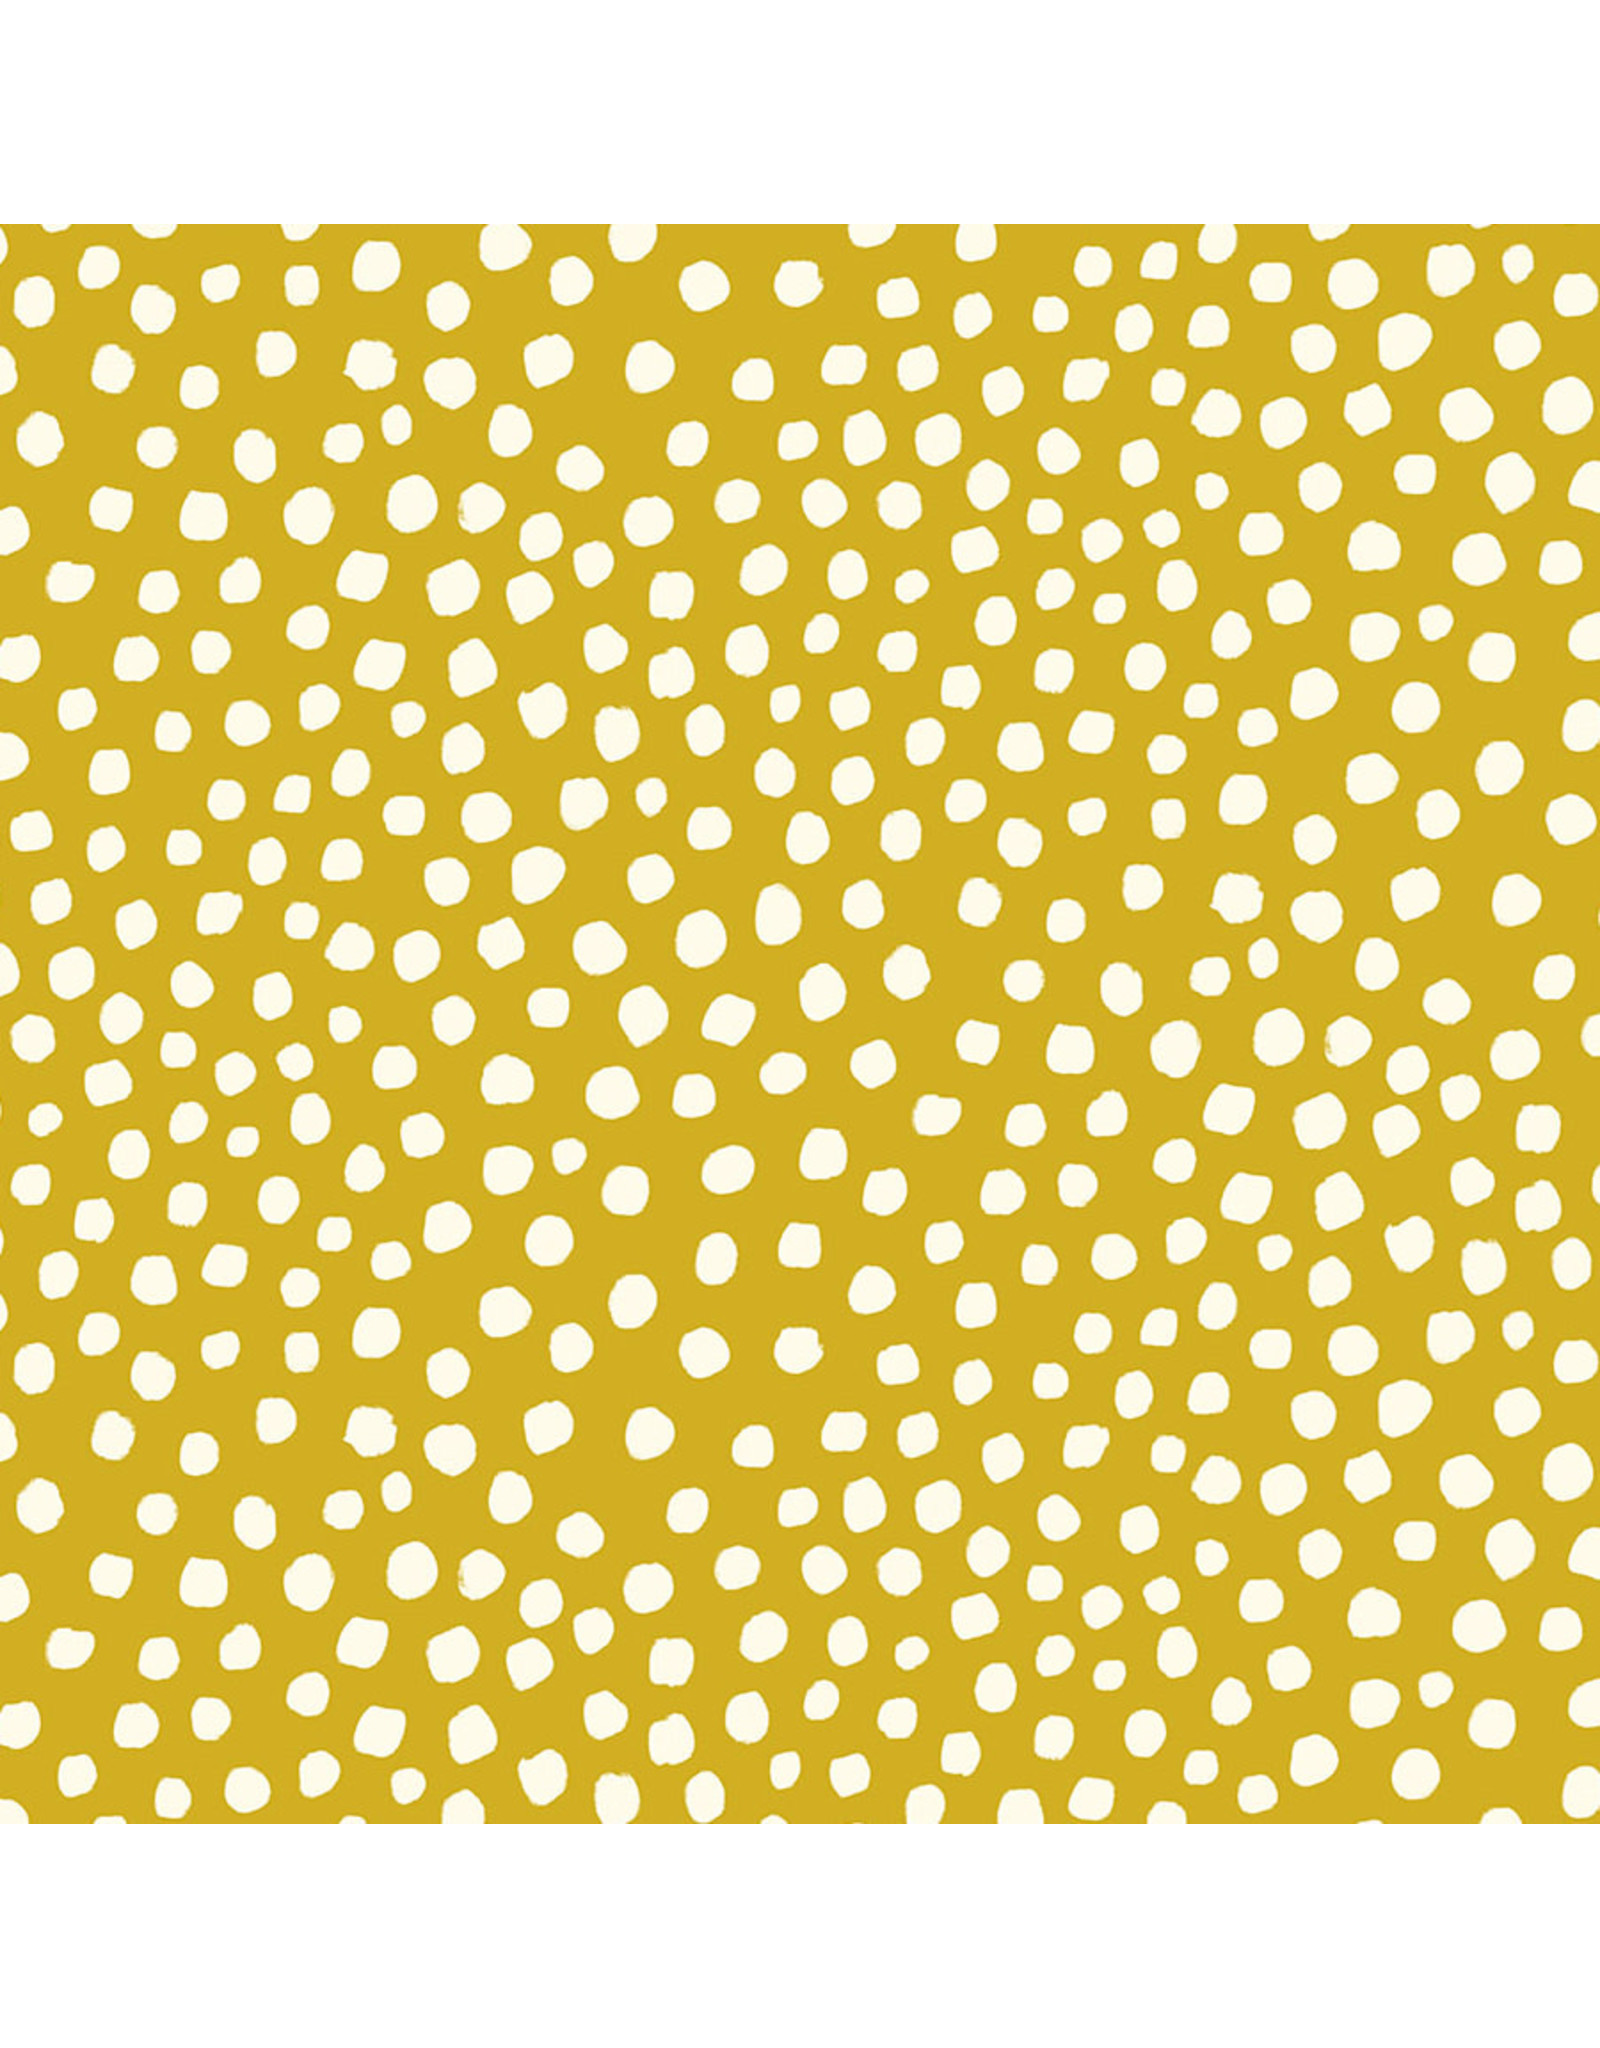 Phoebe Wahl Garden Jubilee, Dots in Gold, Fabric Half-Yards